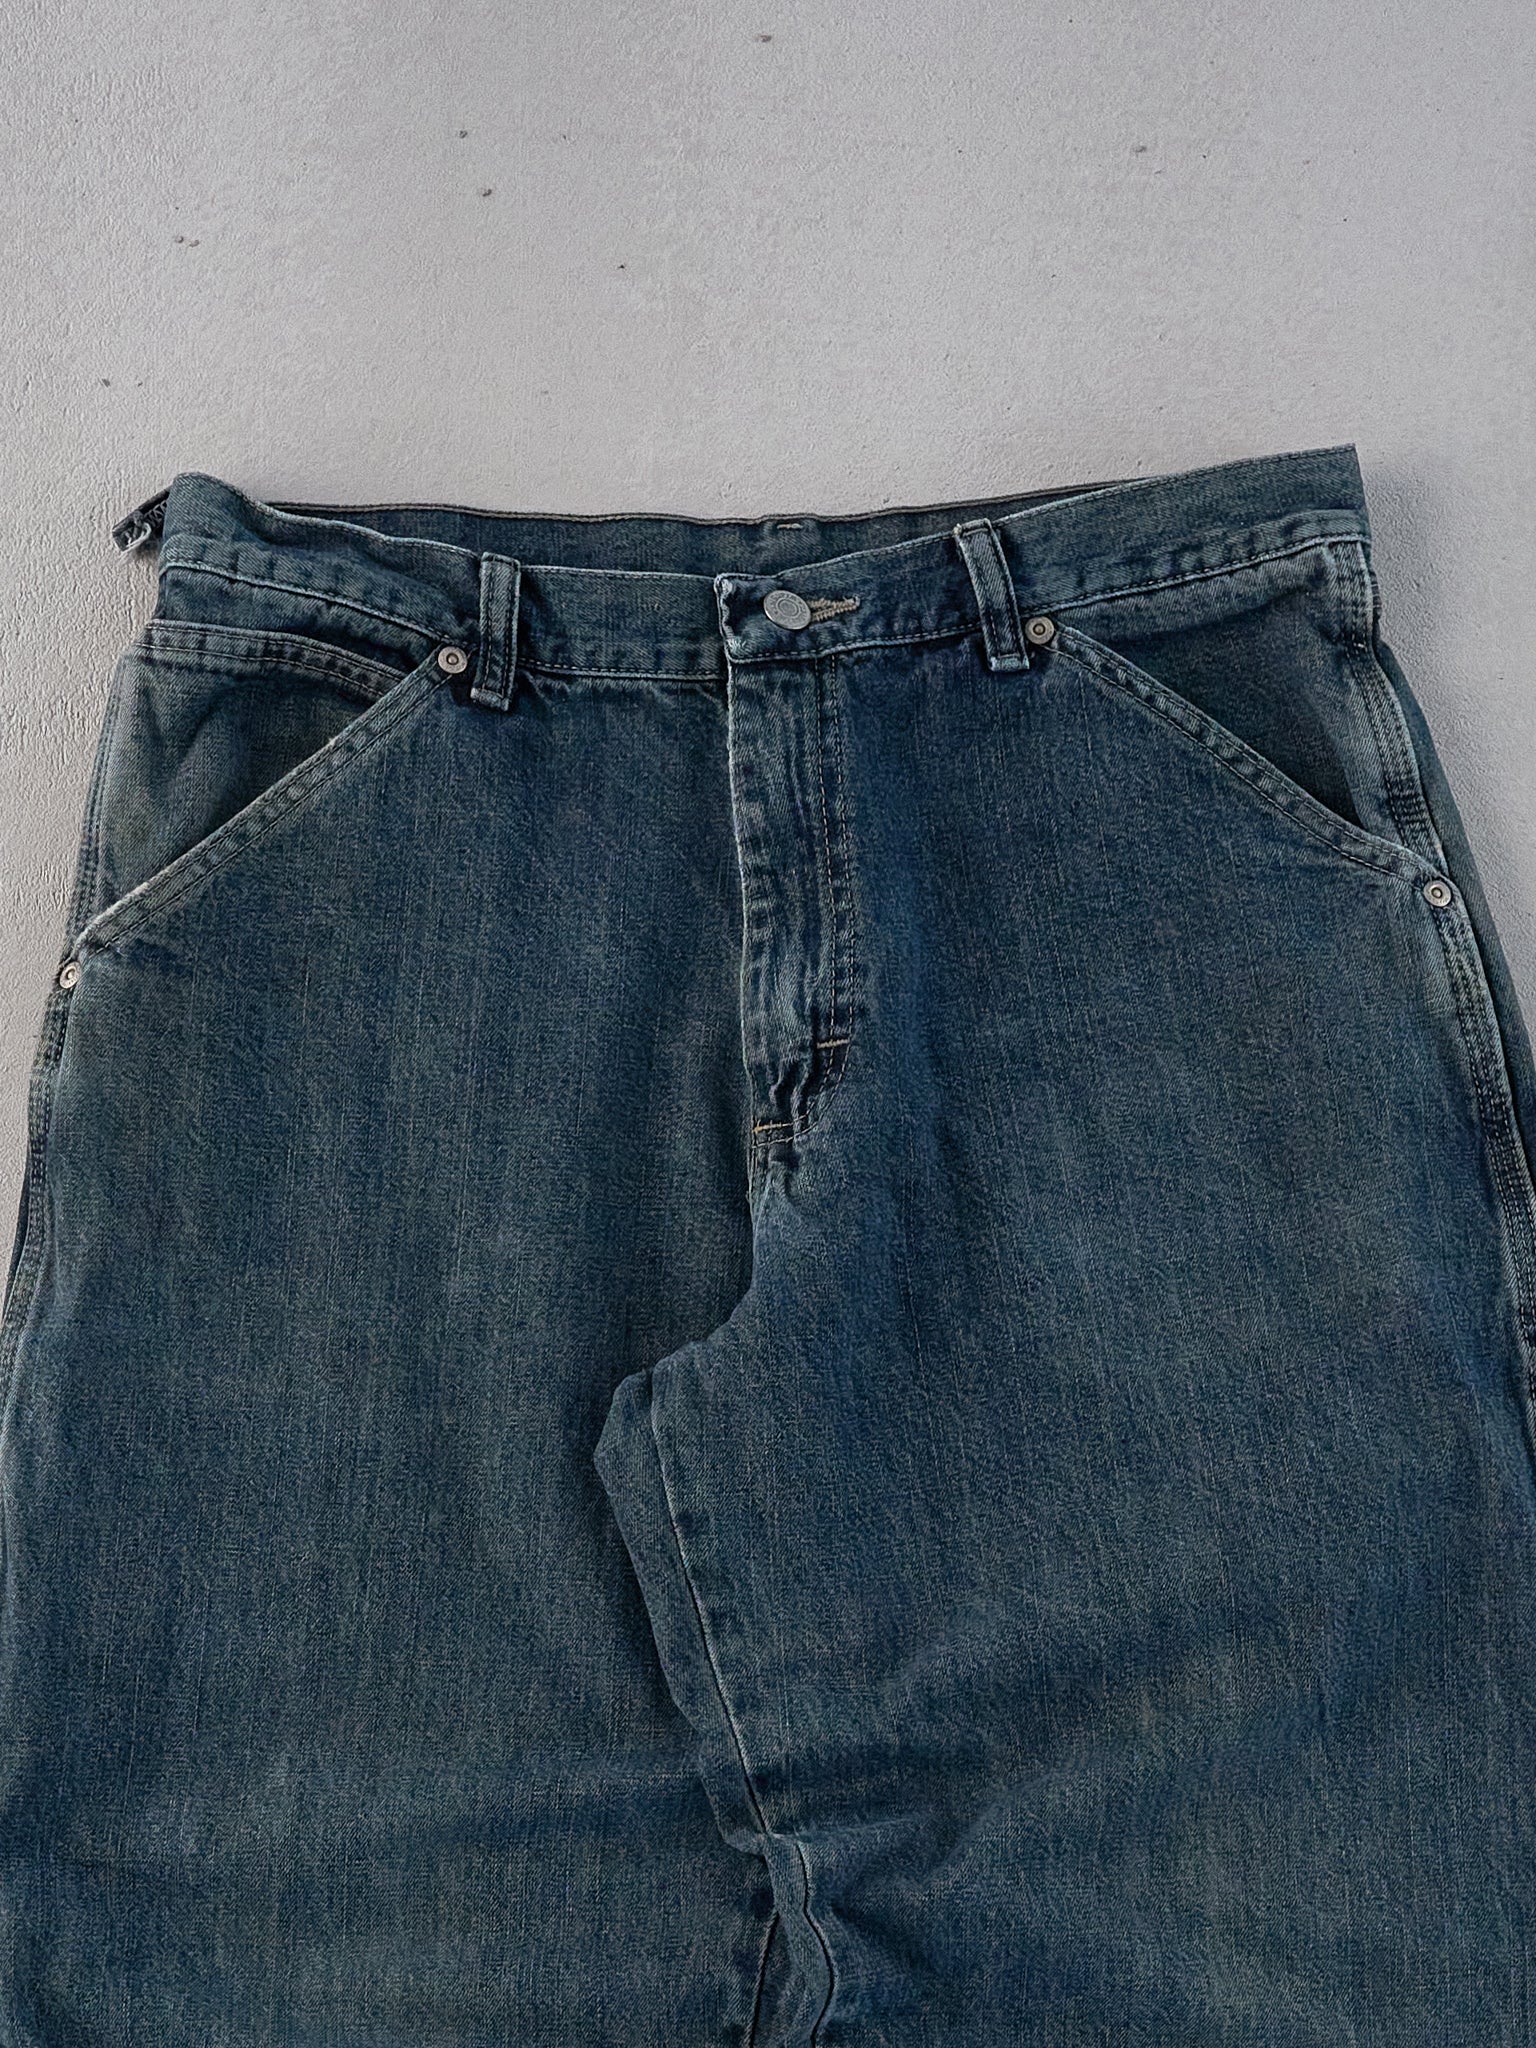 Vintage 90s Dark Blue Wrangler Workwear Carpenter Pants (32x30)